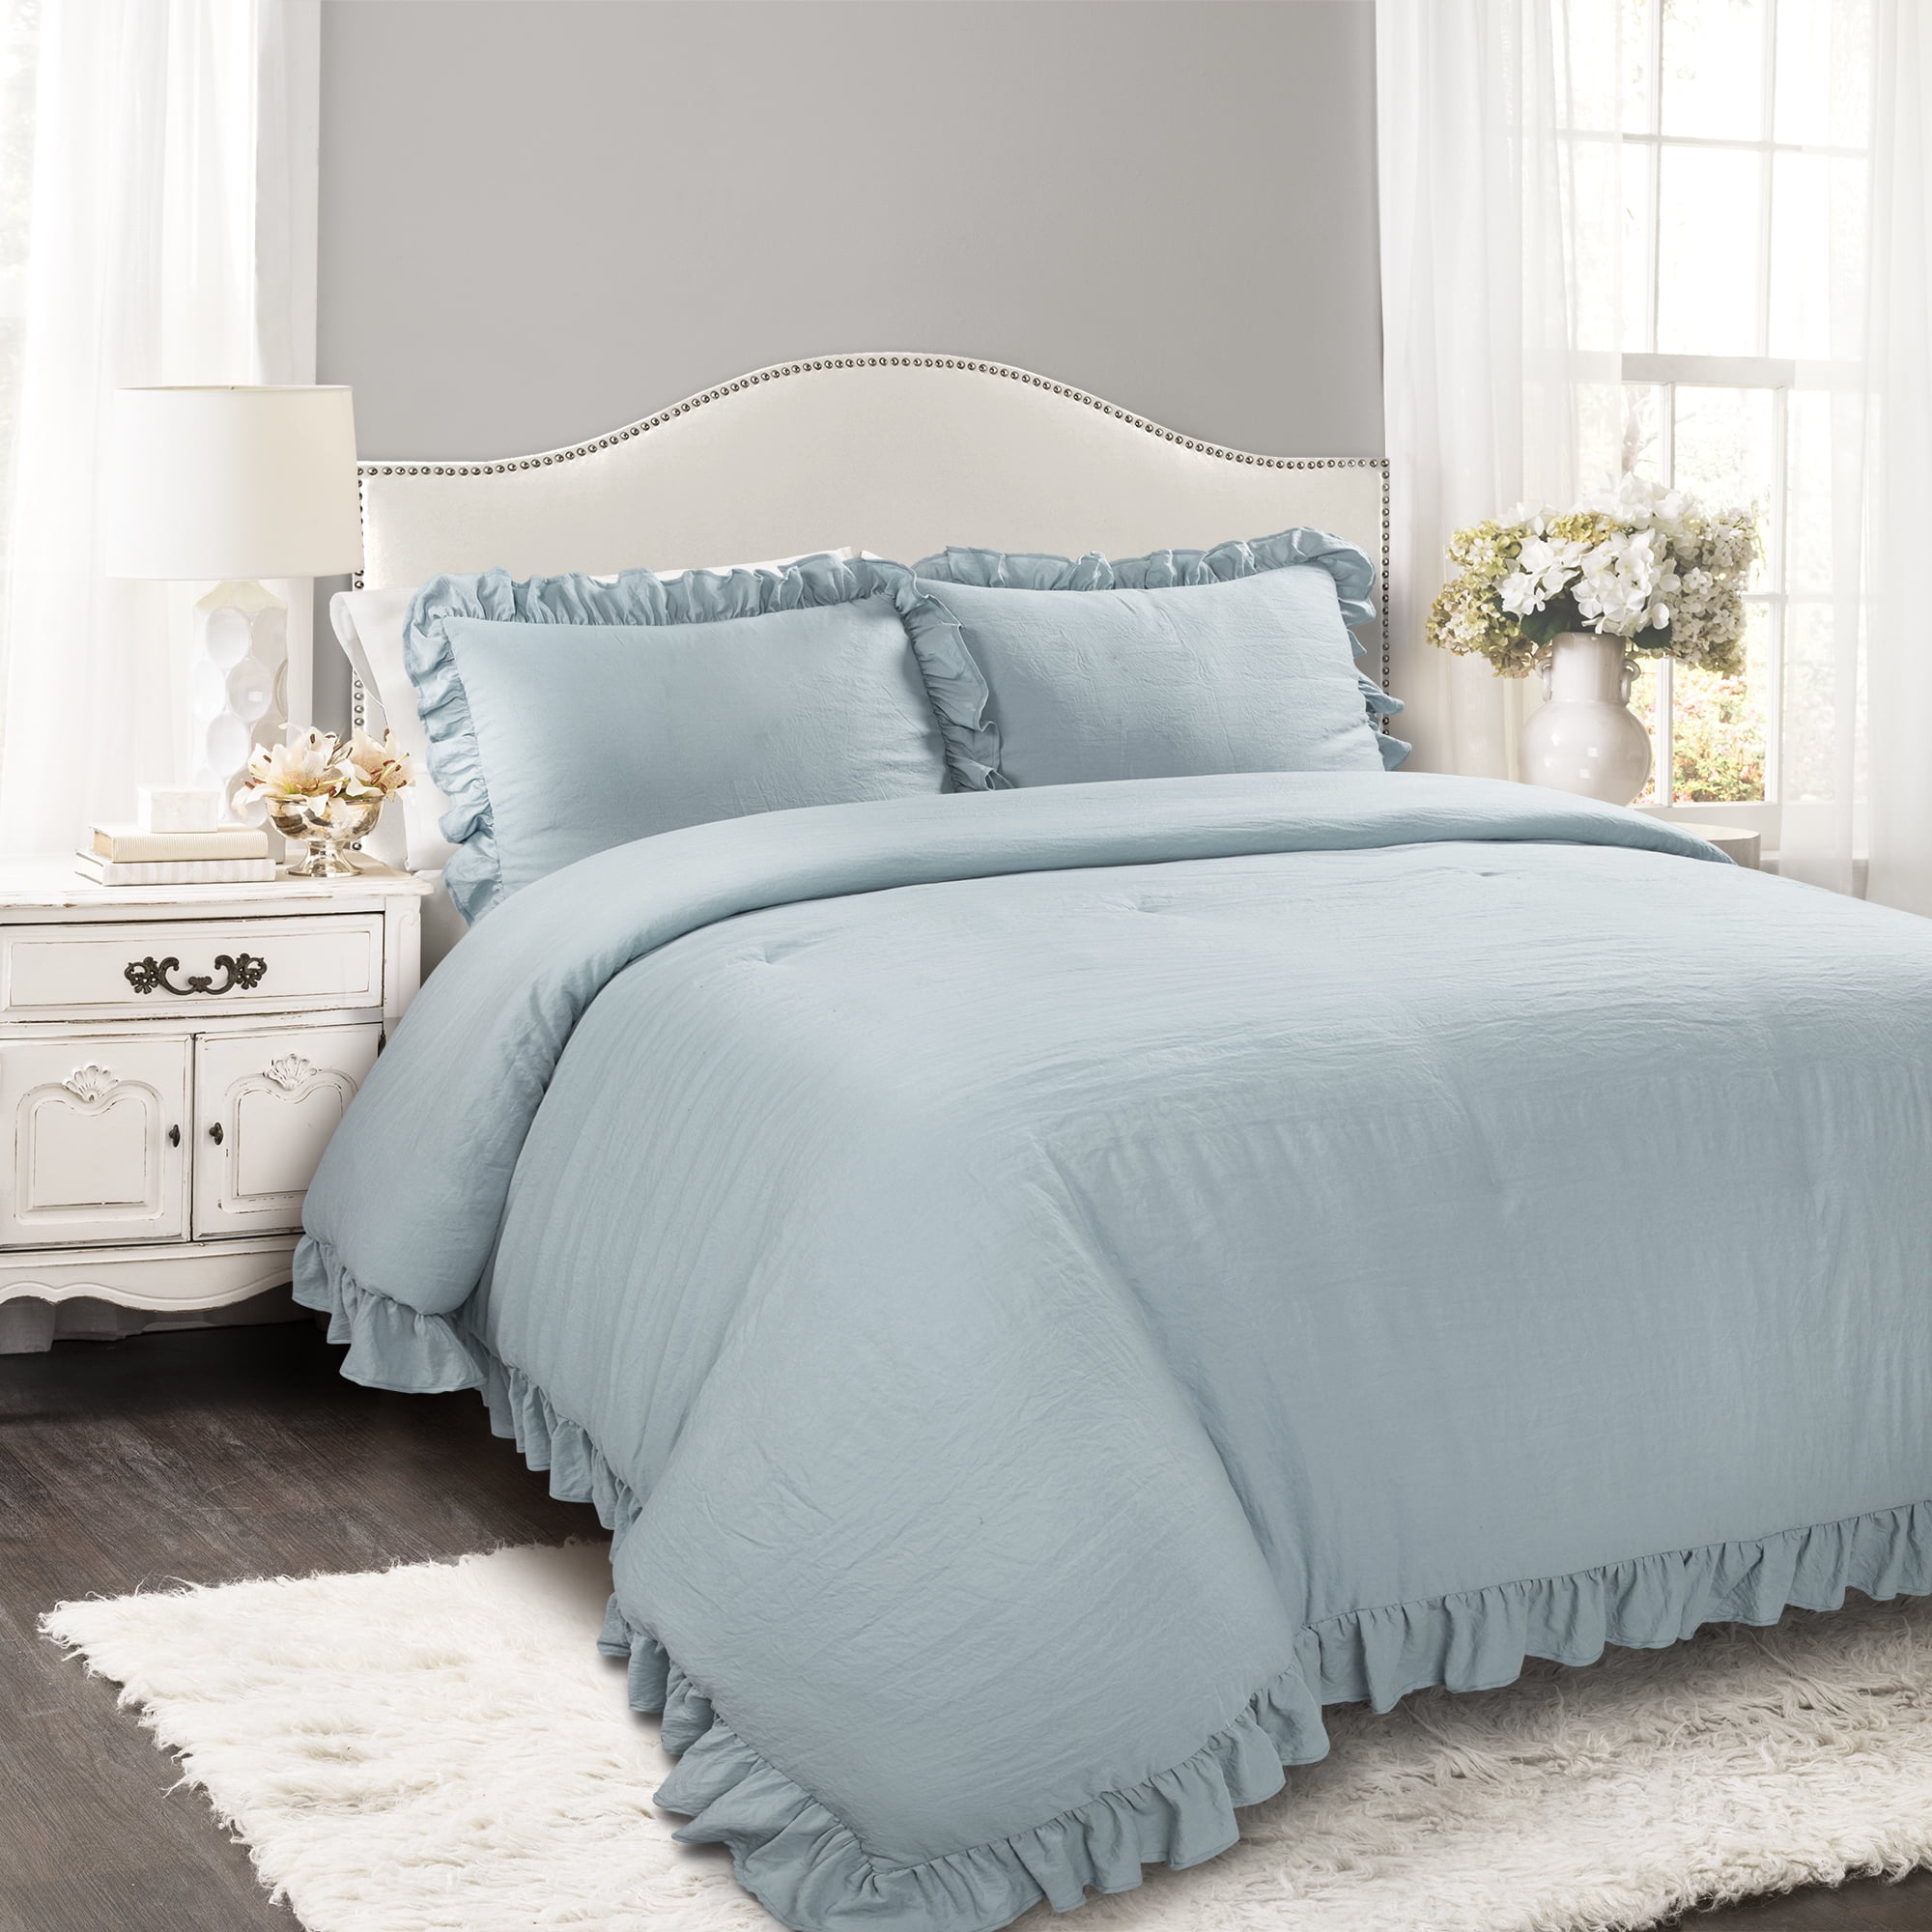 Lush Decor 16T002162 Reyna Comforter Ruffled 3 Piece Bedding Set King Gray for sale online 